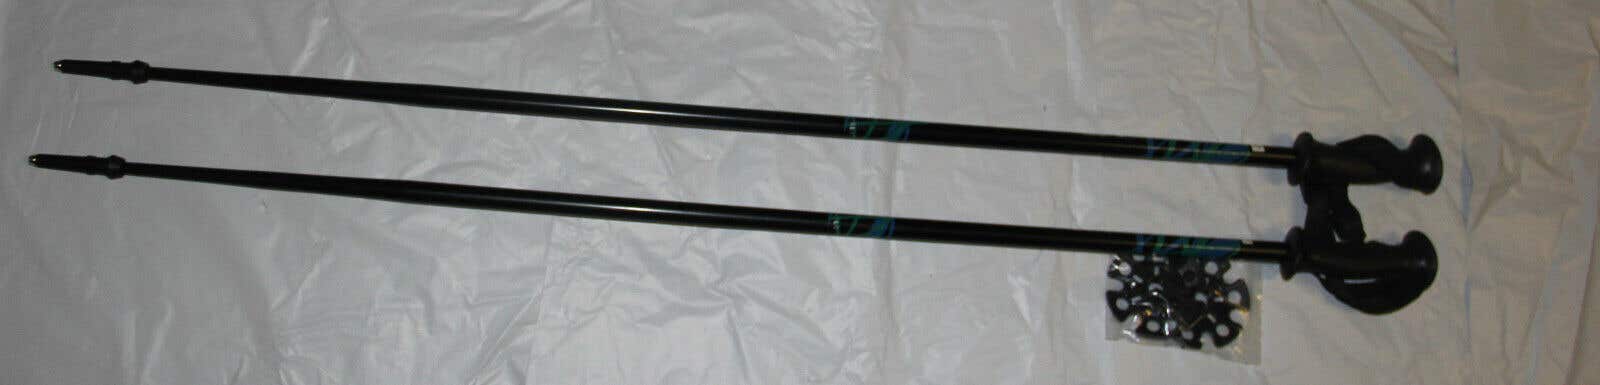 NEW Ski poles downhill strong Aluminum 7075 adult Ski Poles  120cm /48" New pair